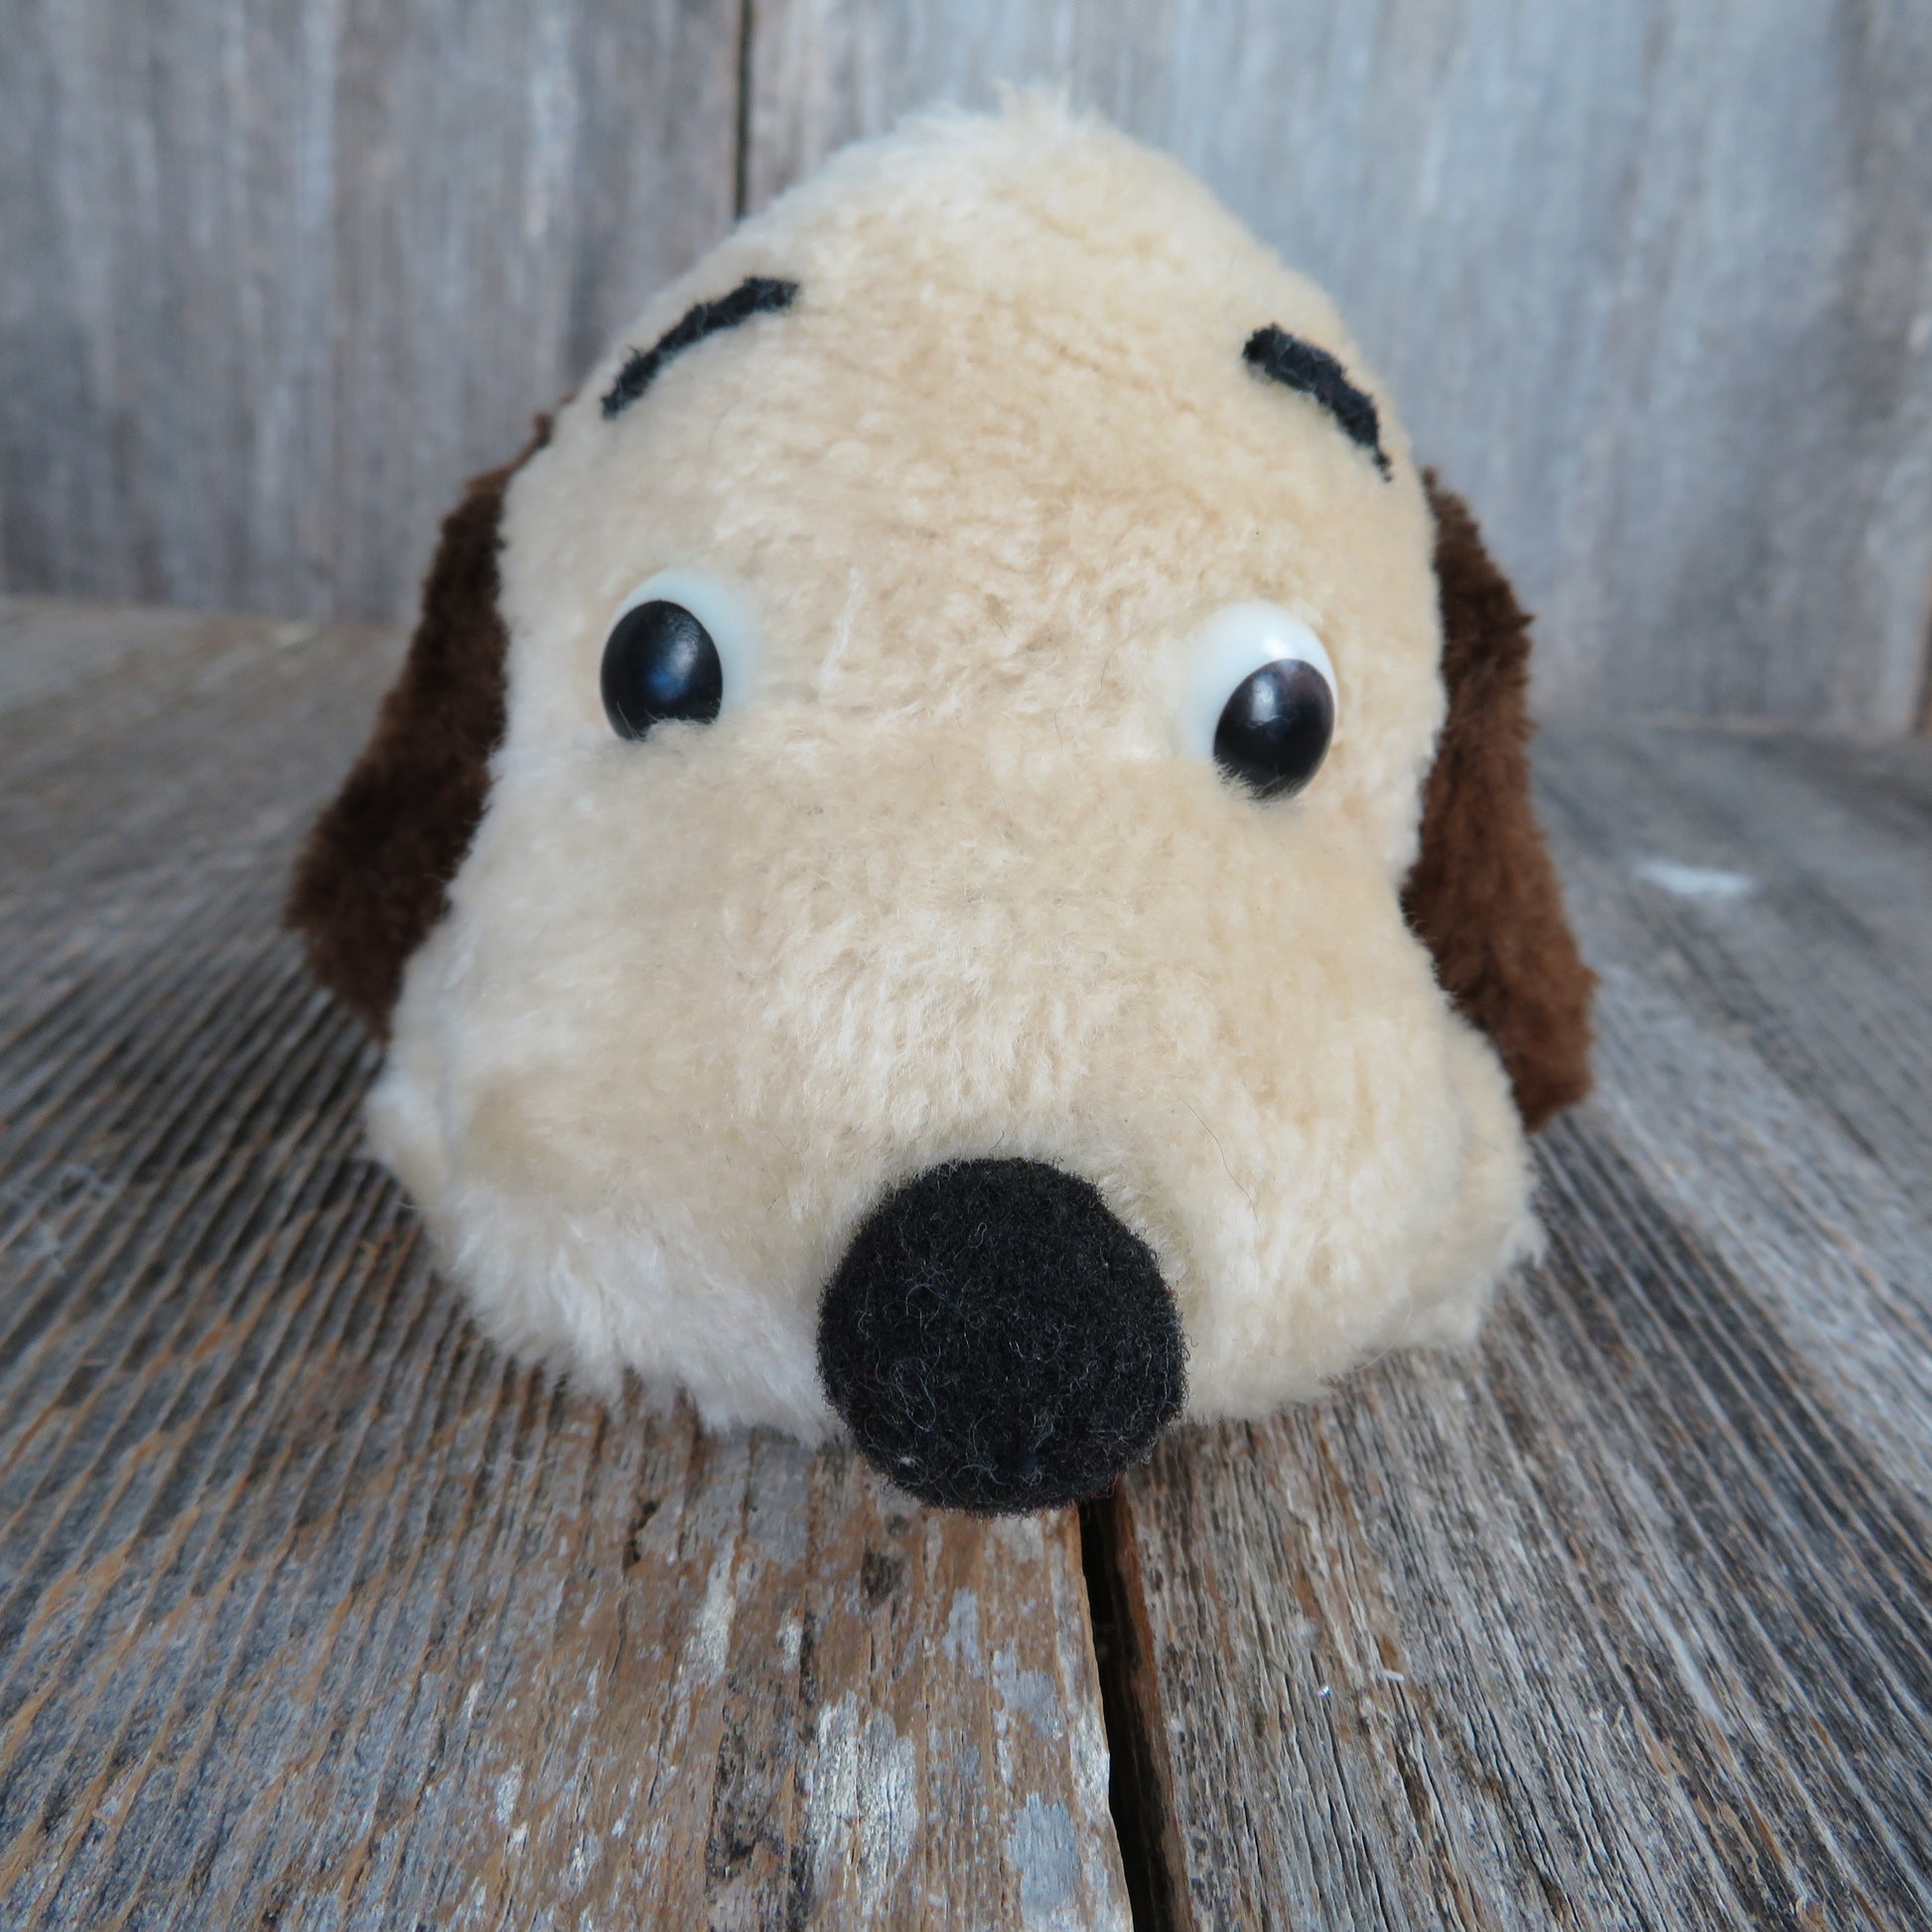 Vintage Dakin Drooper Dog Plush Cream Beige Puppy Brown Ears Stuffed Animal Toy Doll 6 Inch 1973 - At Grandma's Table